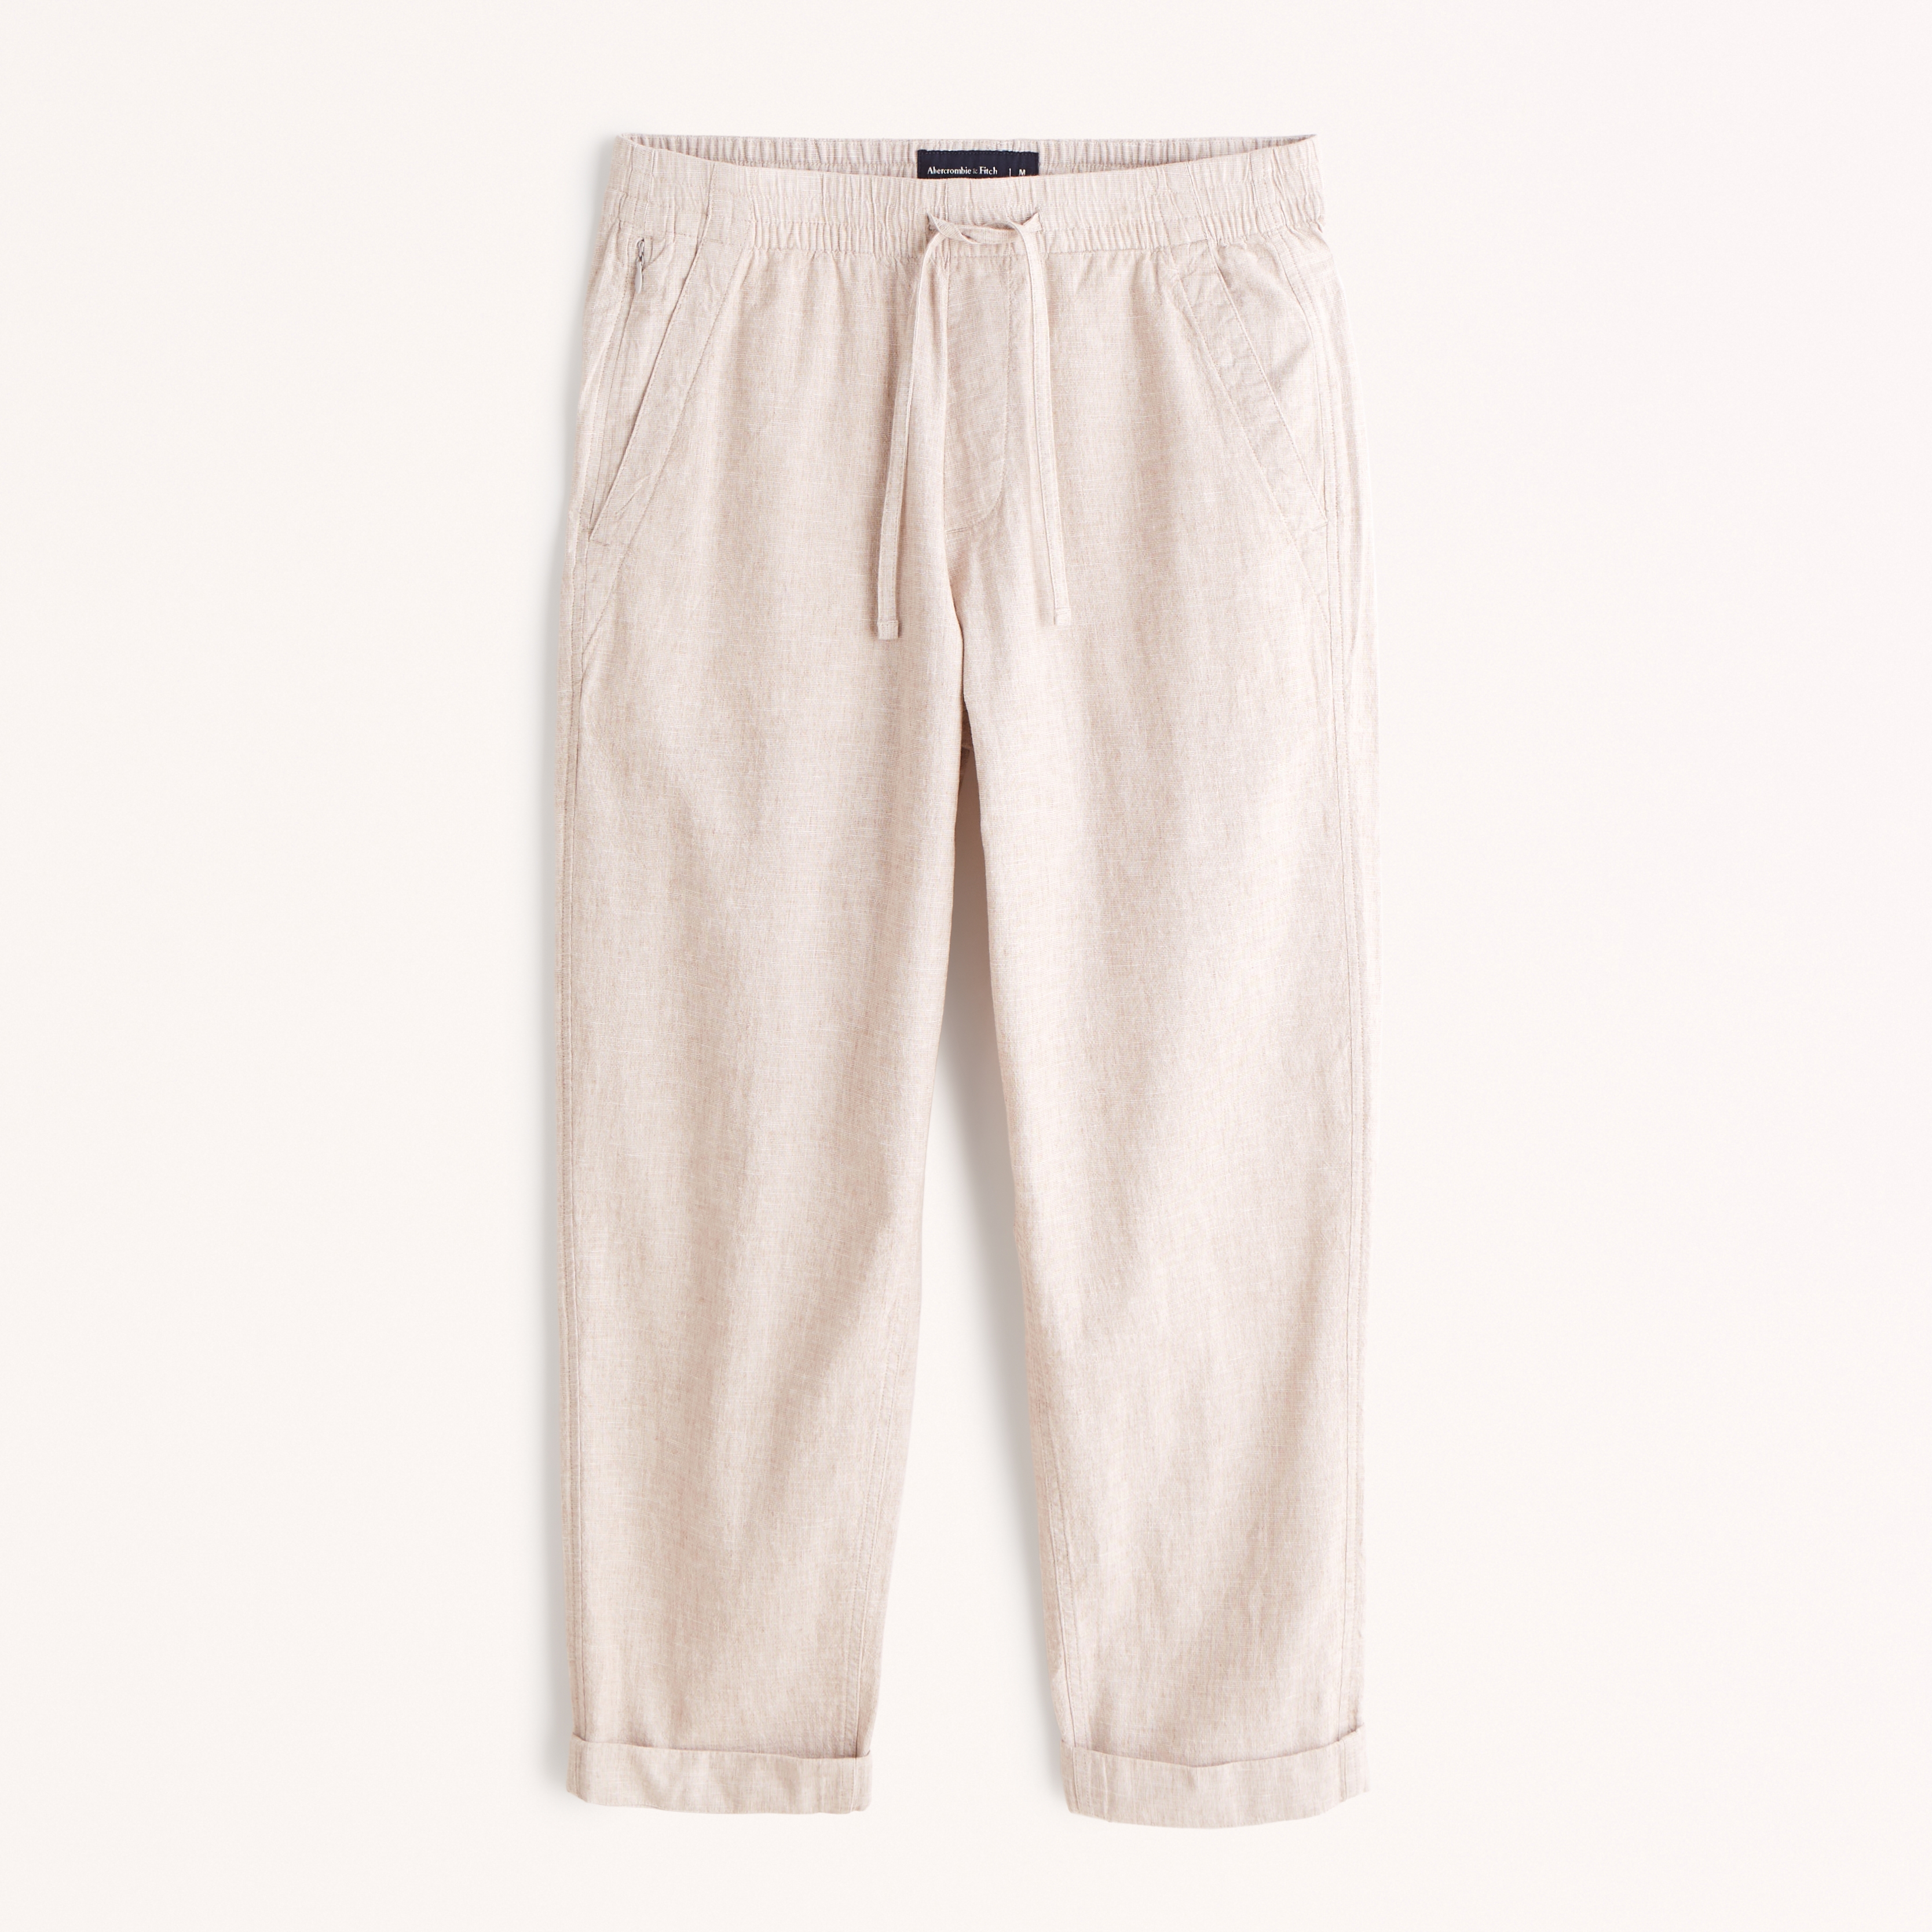 NWT COS High Waist White Pants Drawstring Organic Cotton Straight Cut ,  Size 4